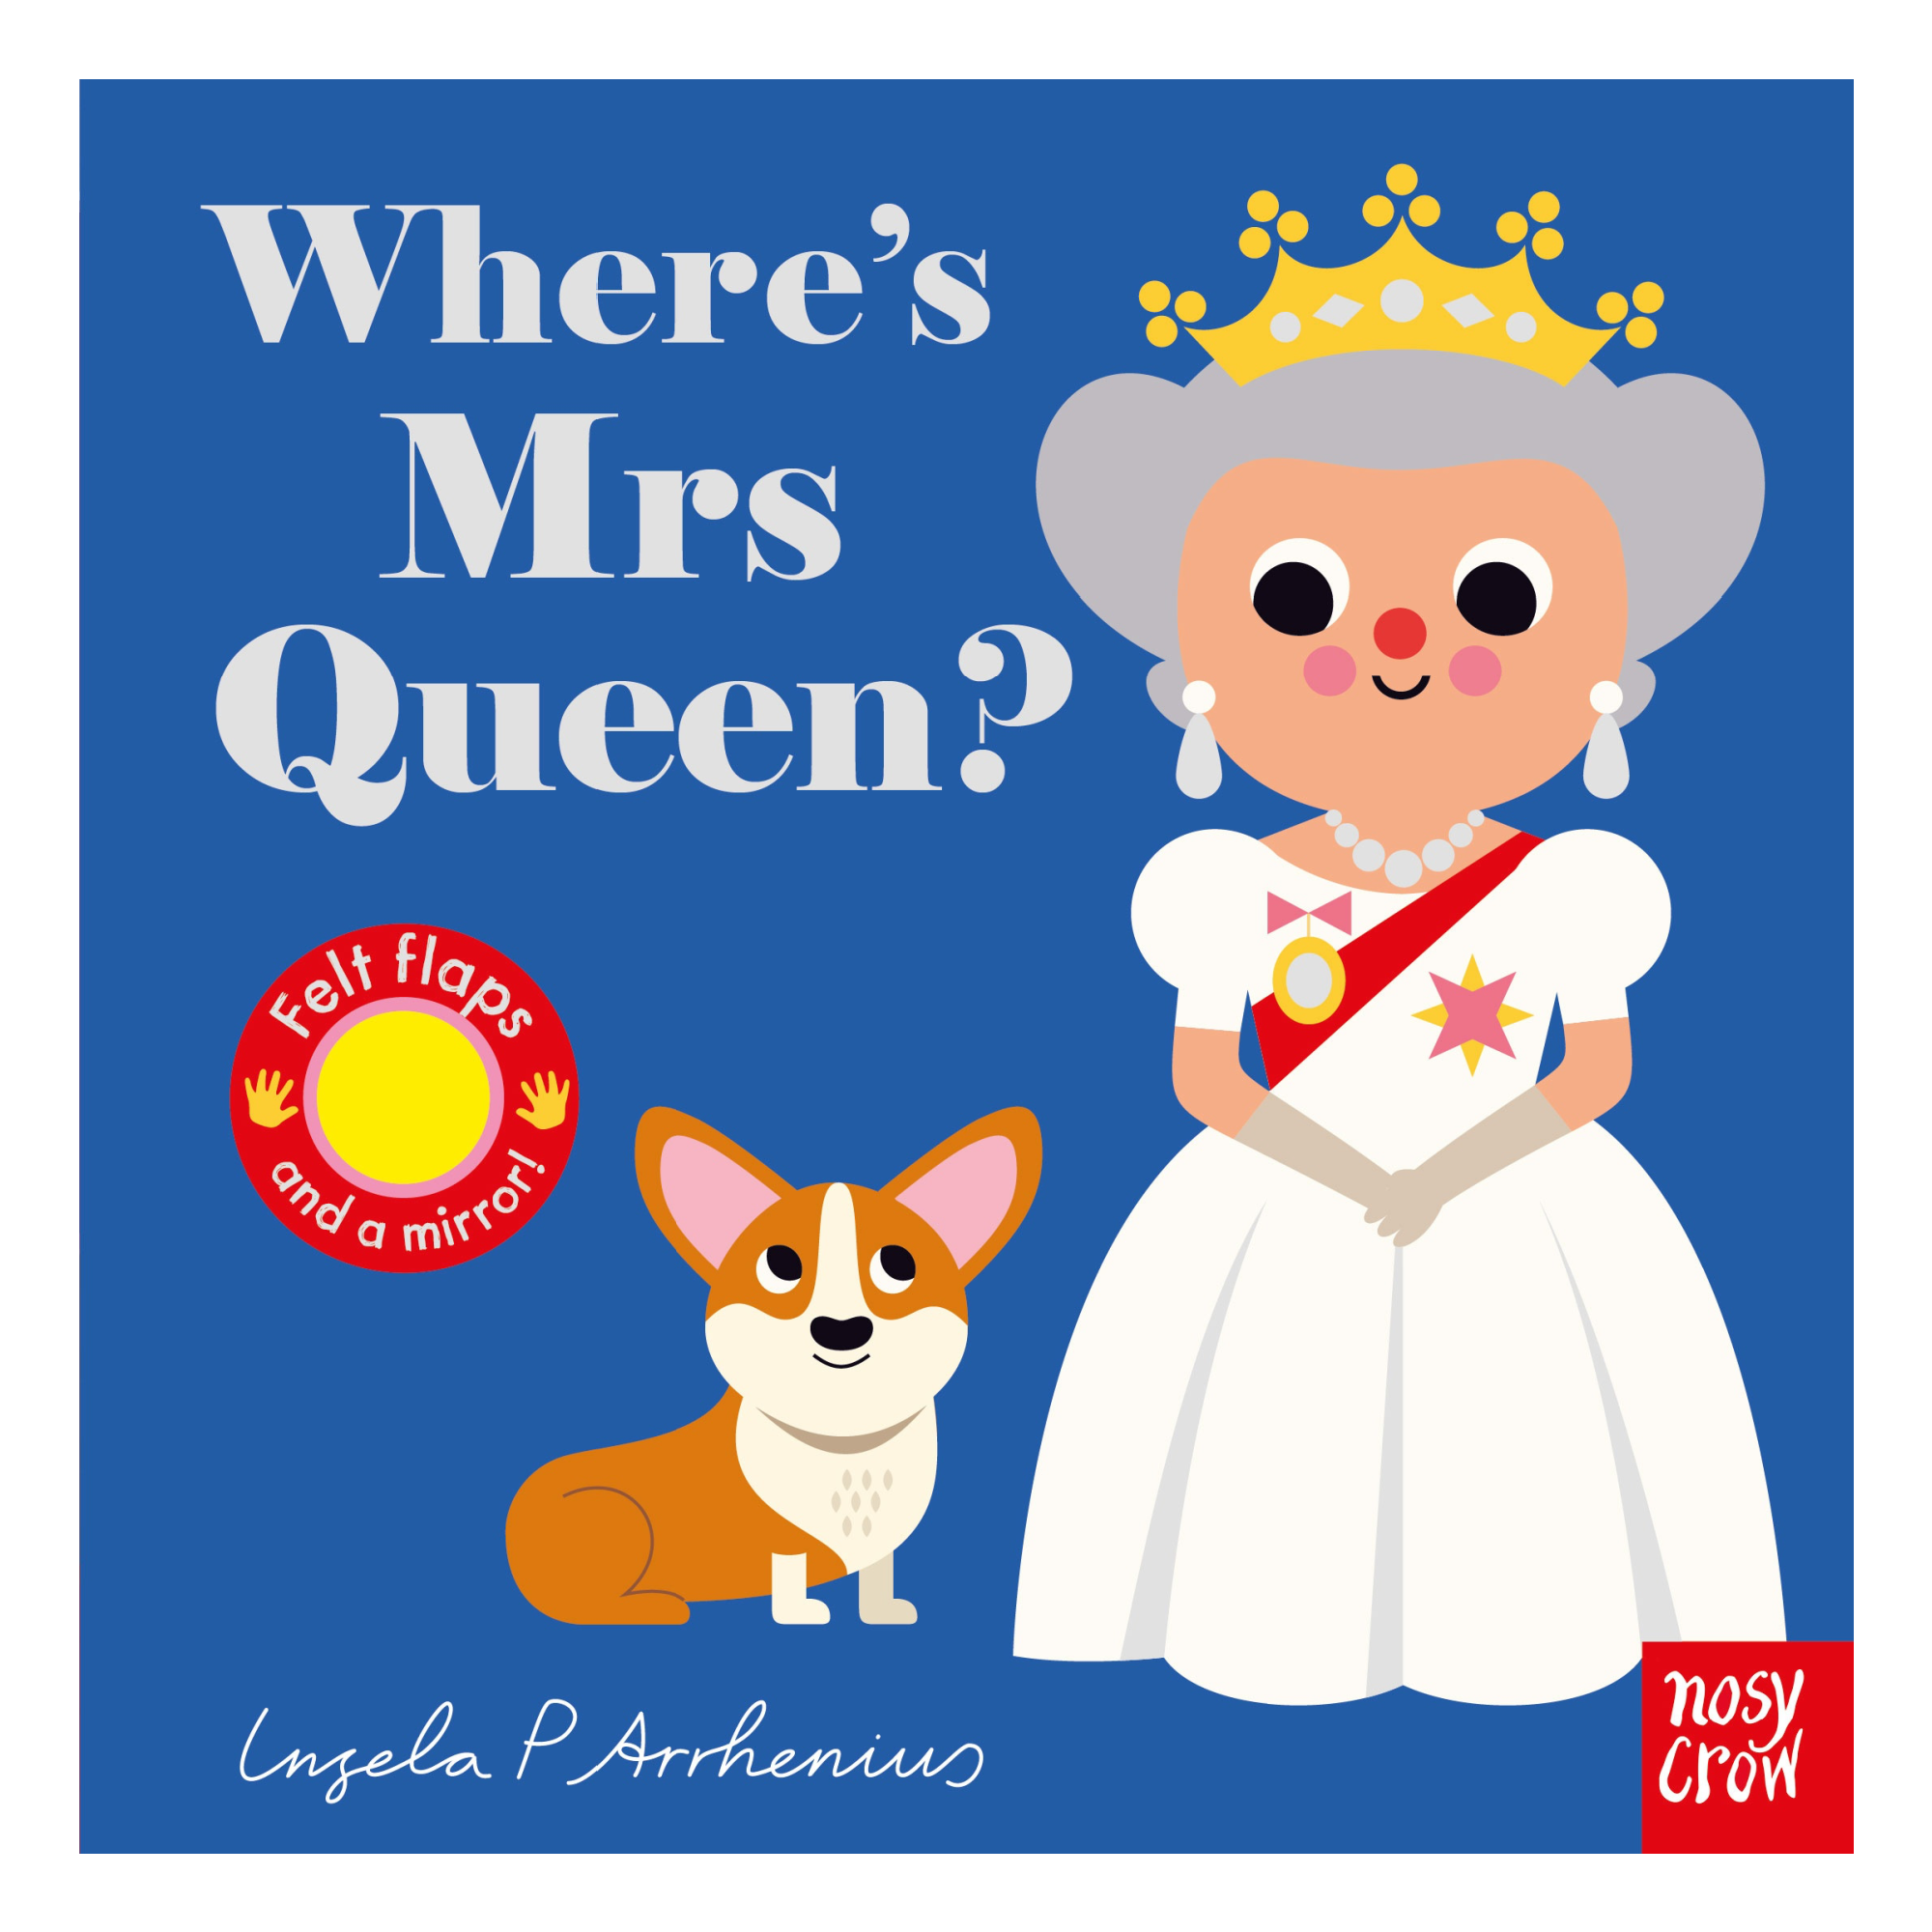 Where's Mrs Queen?